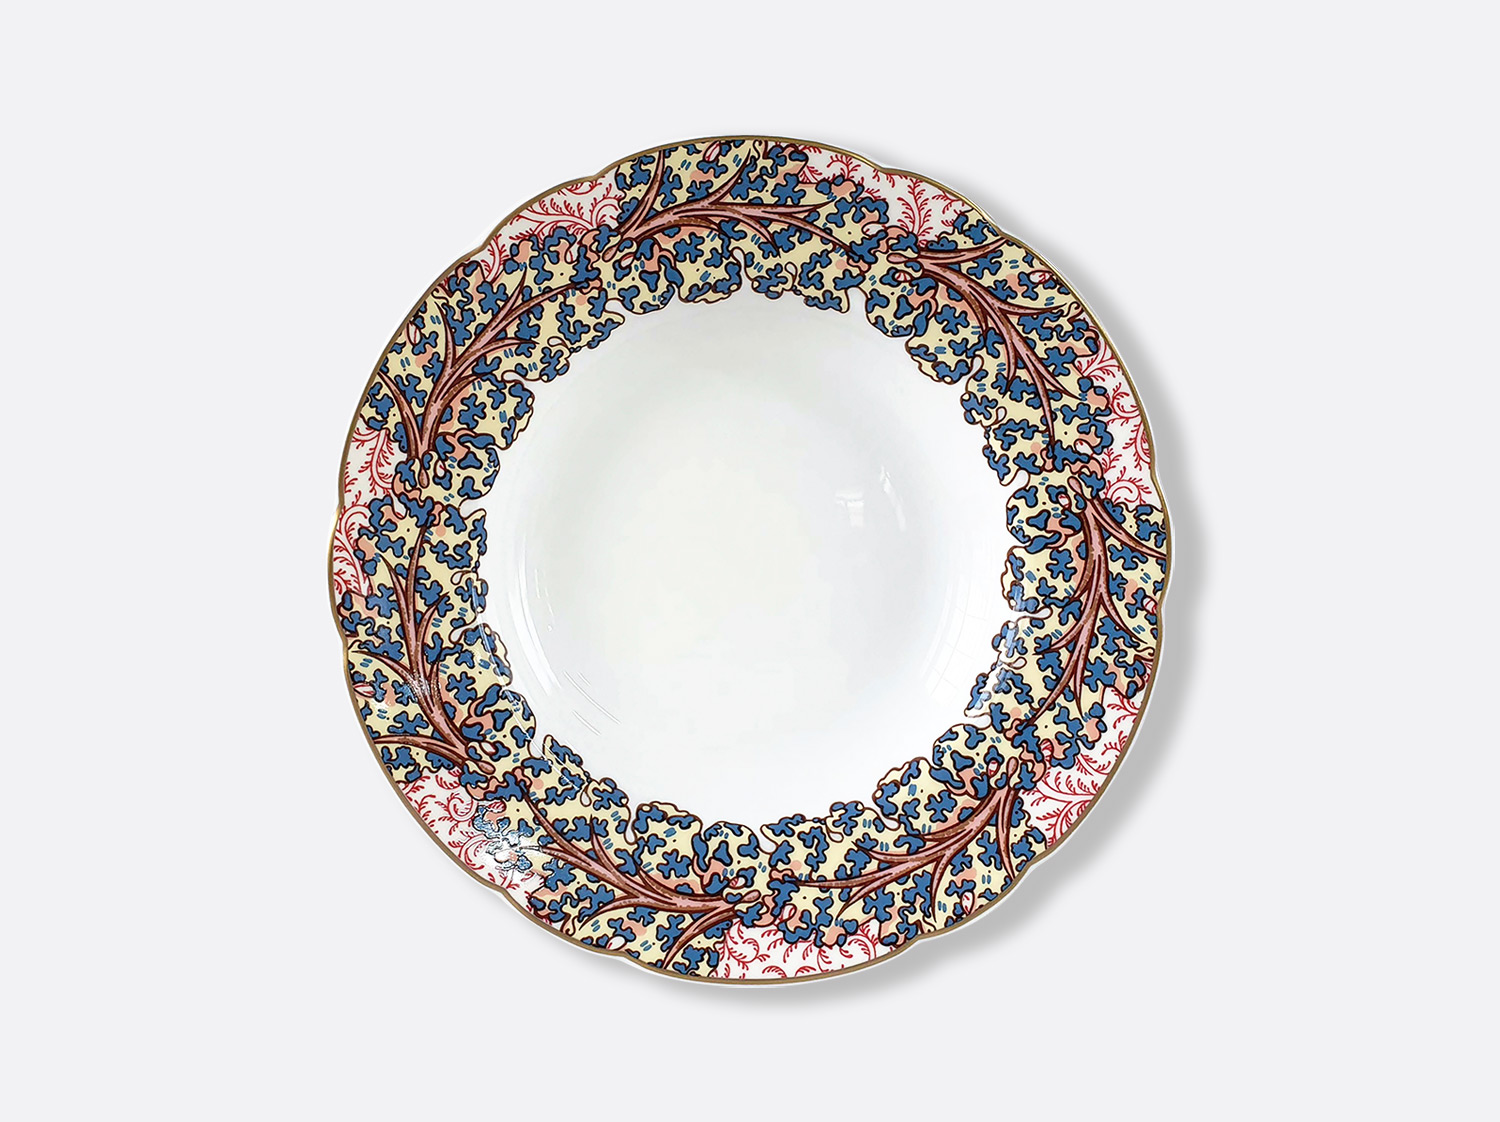 China Rim soup 9" of the collection Collection Braquenié | Bernardaud